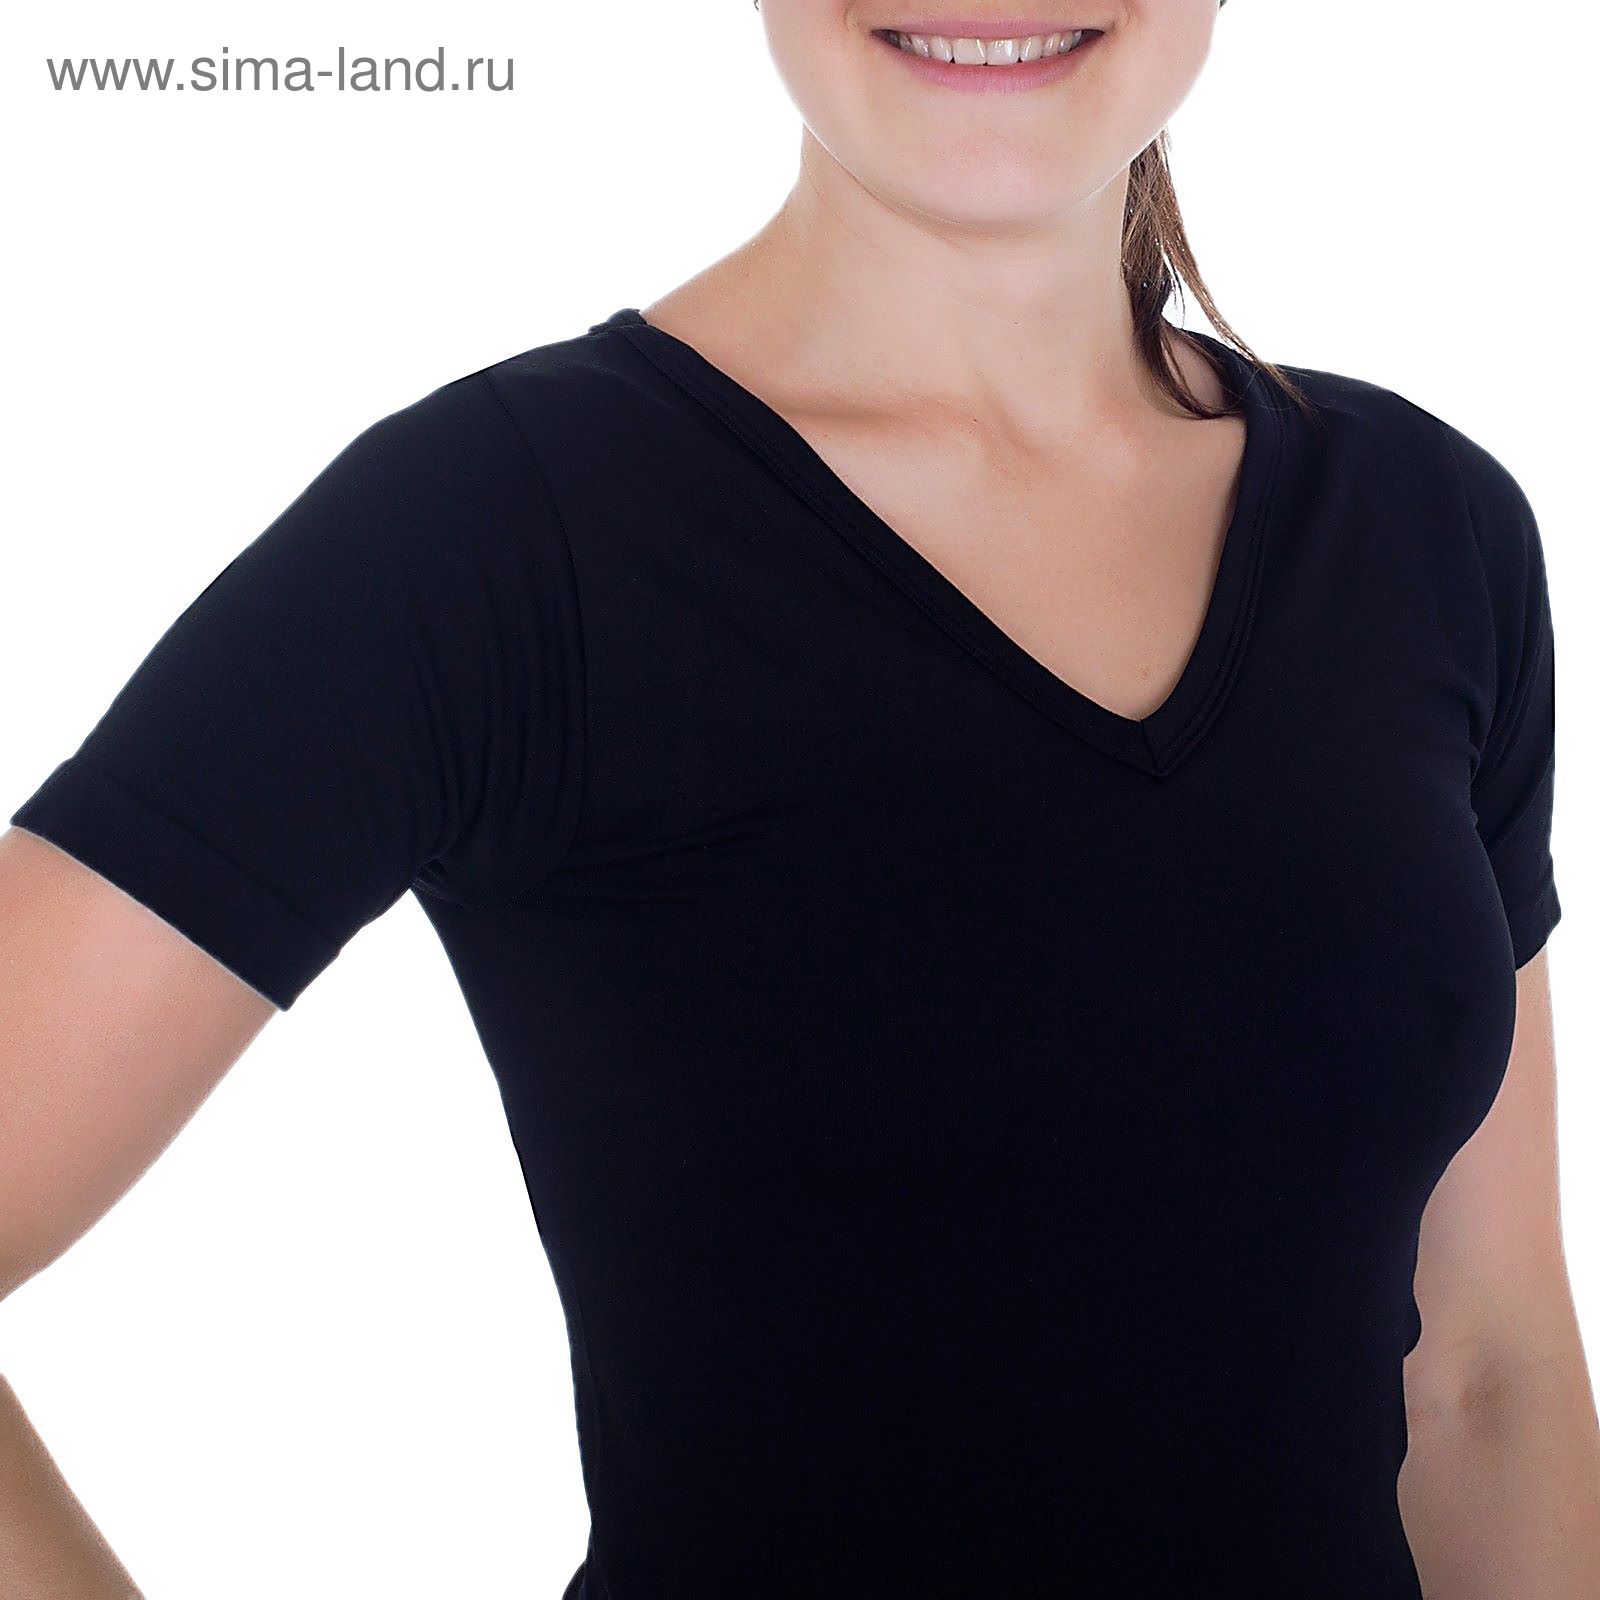 Спортивная футболка ONLITOP Balance black, размер S-M (42-44)